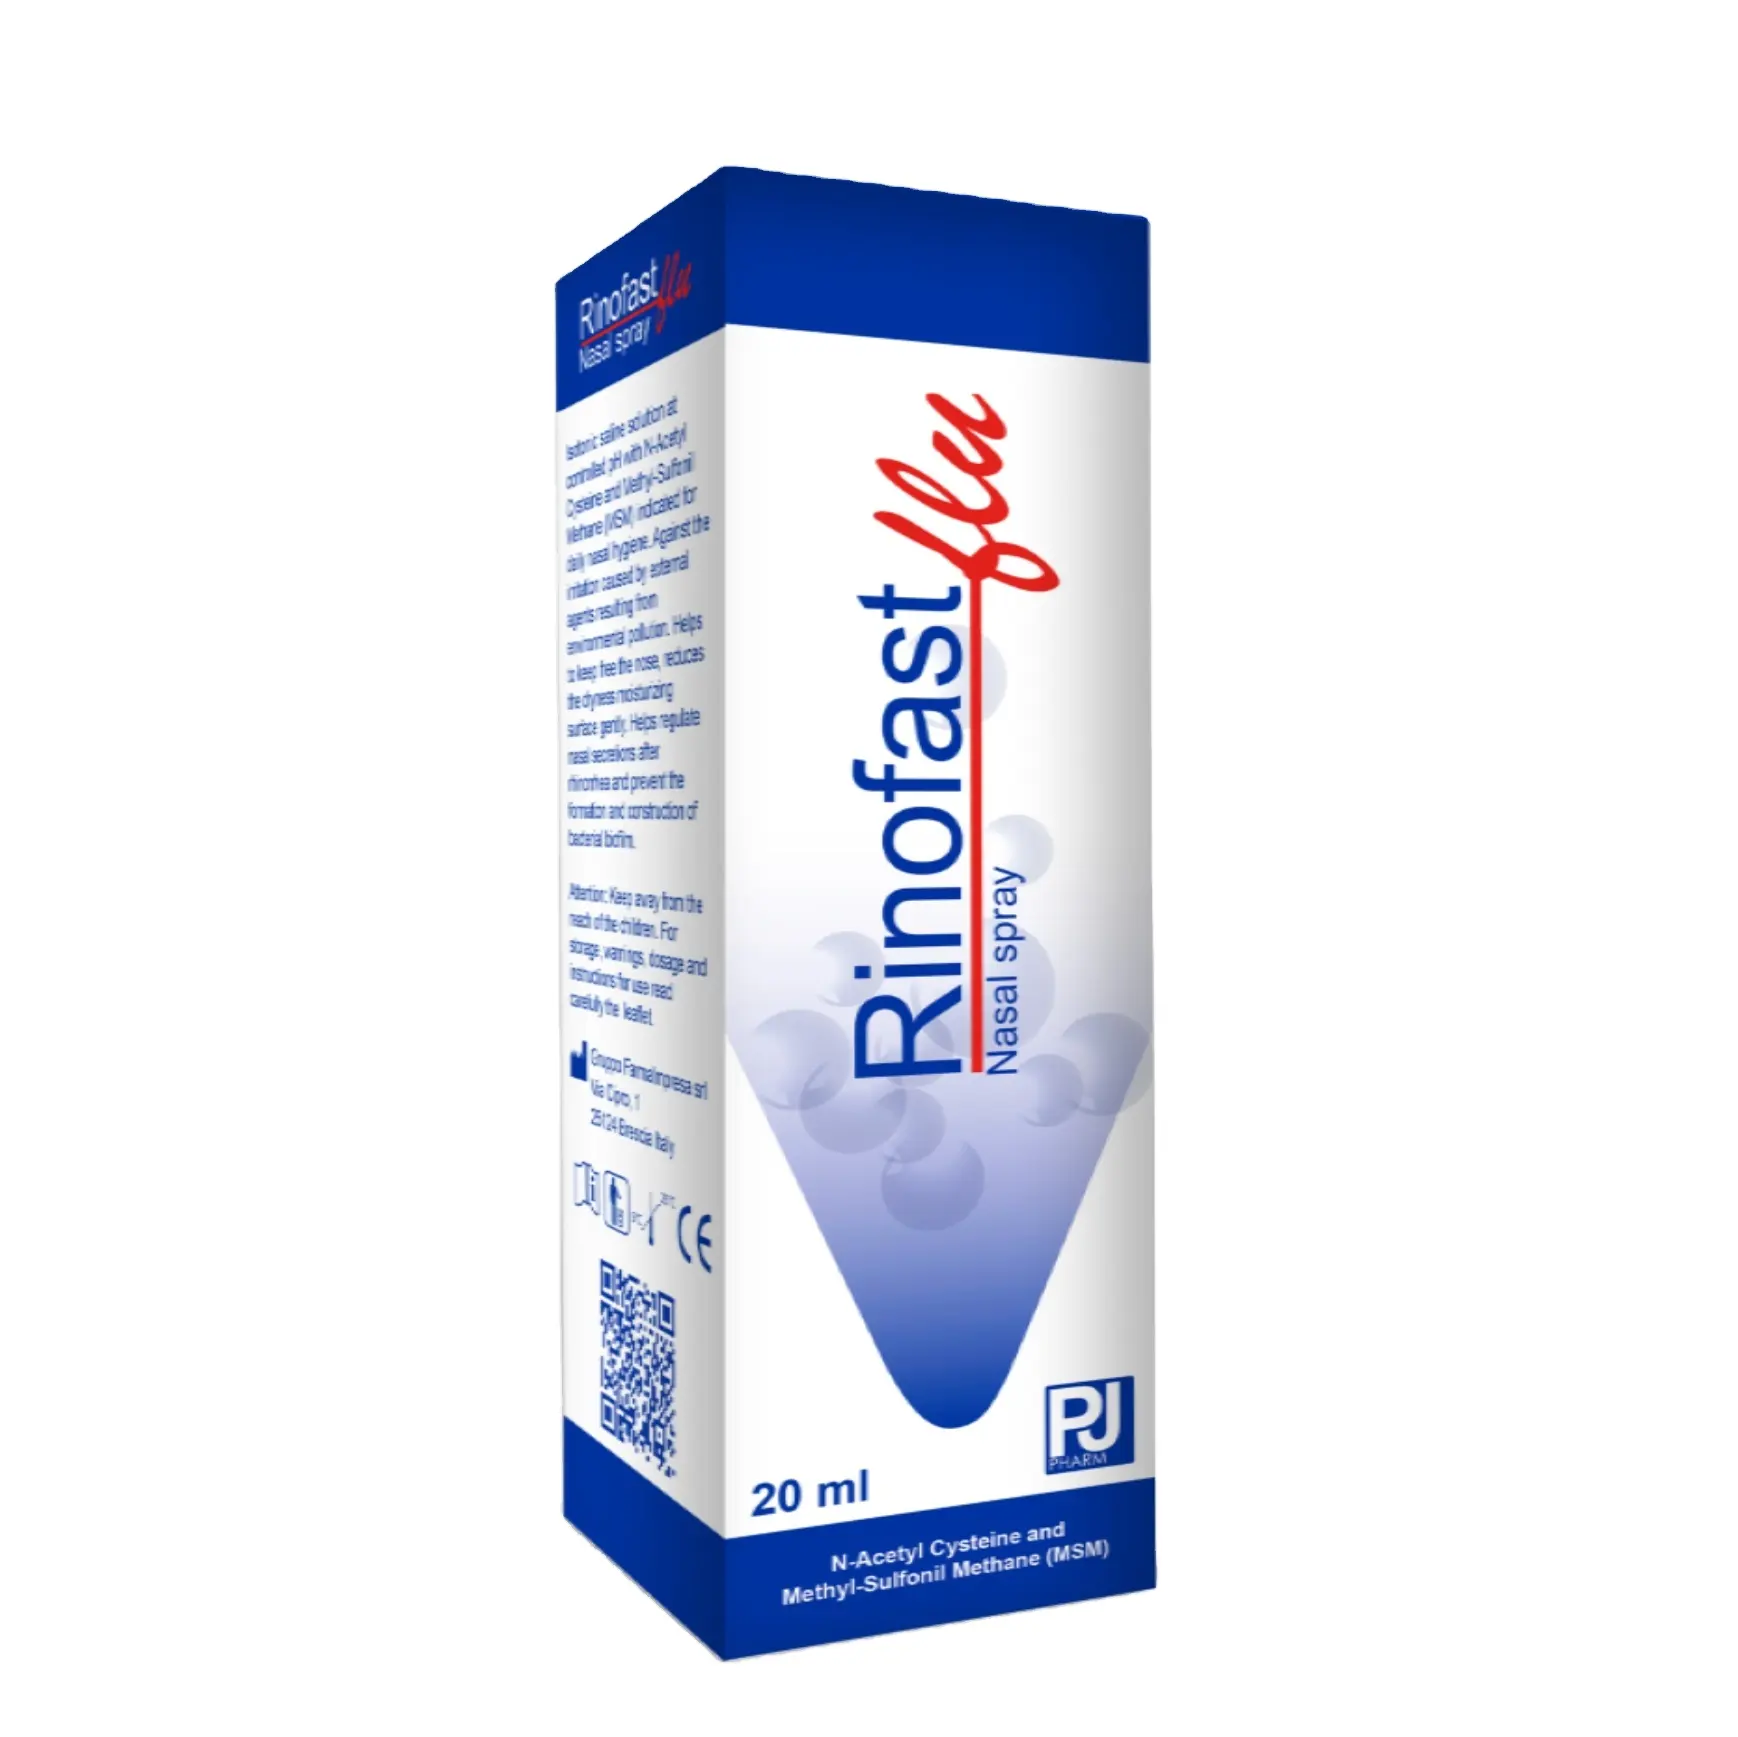 Gruppo farmaImpresa Premium health supplement isotonic saline solution decongestionant nasal spray RINOFAST FLU made in Italy